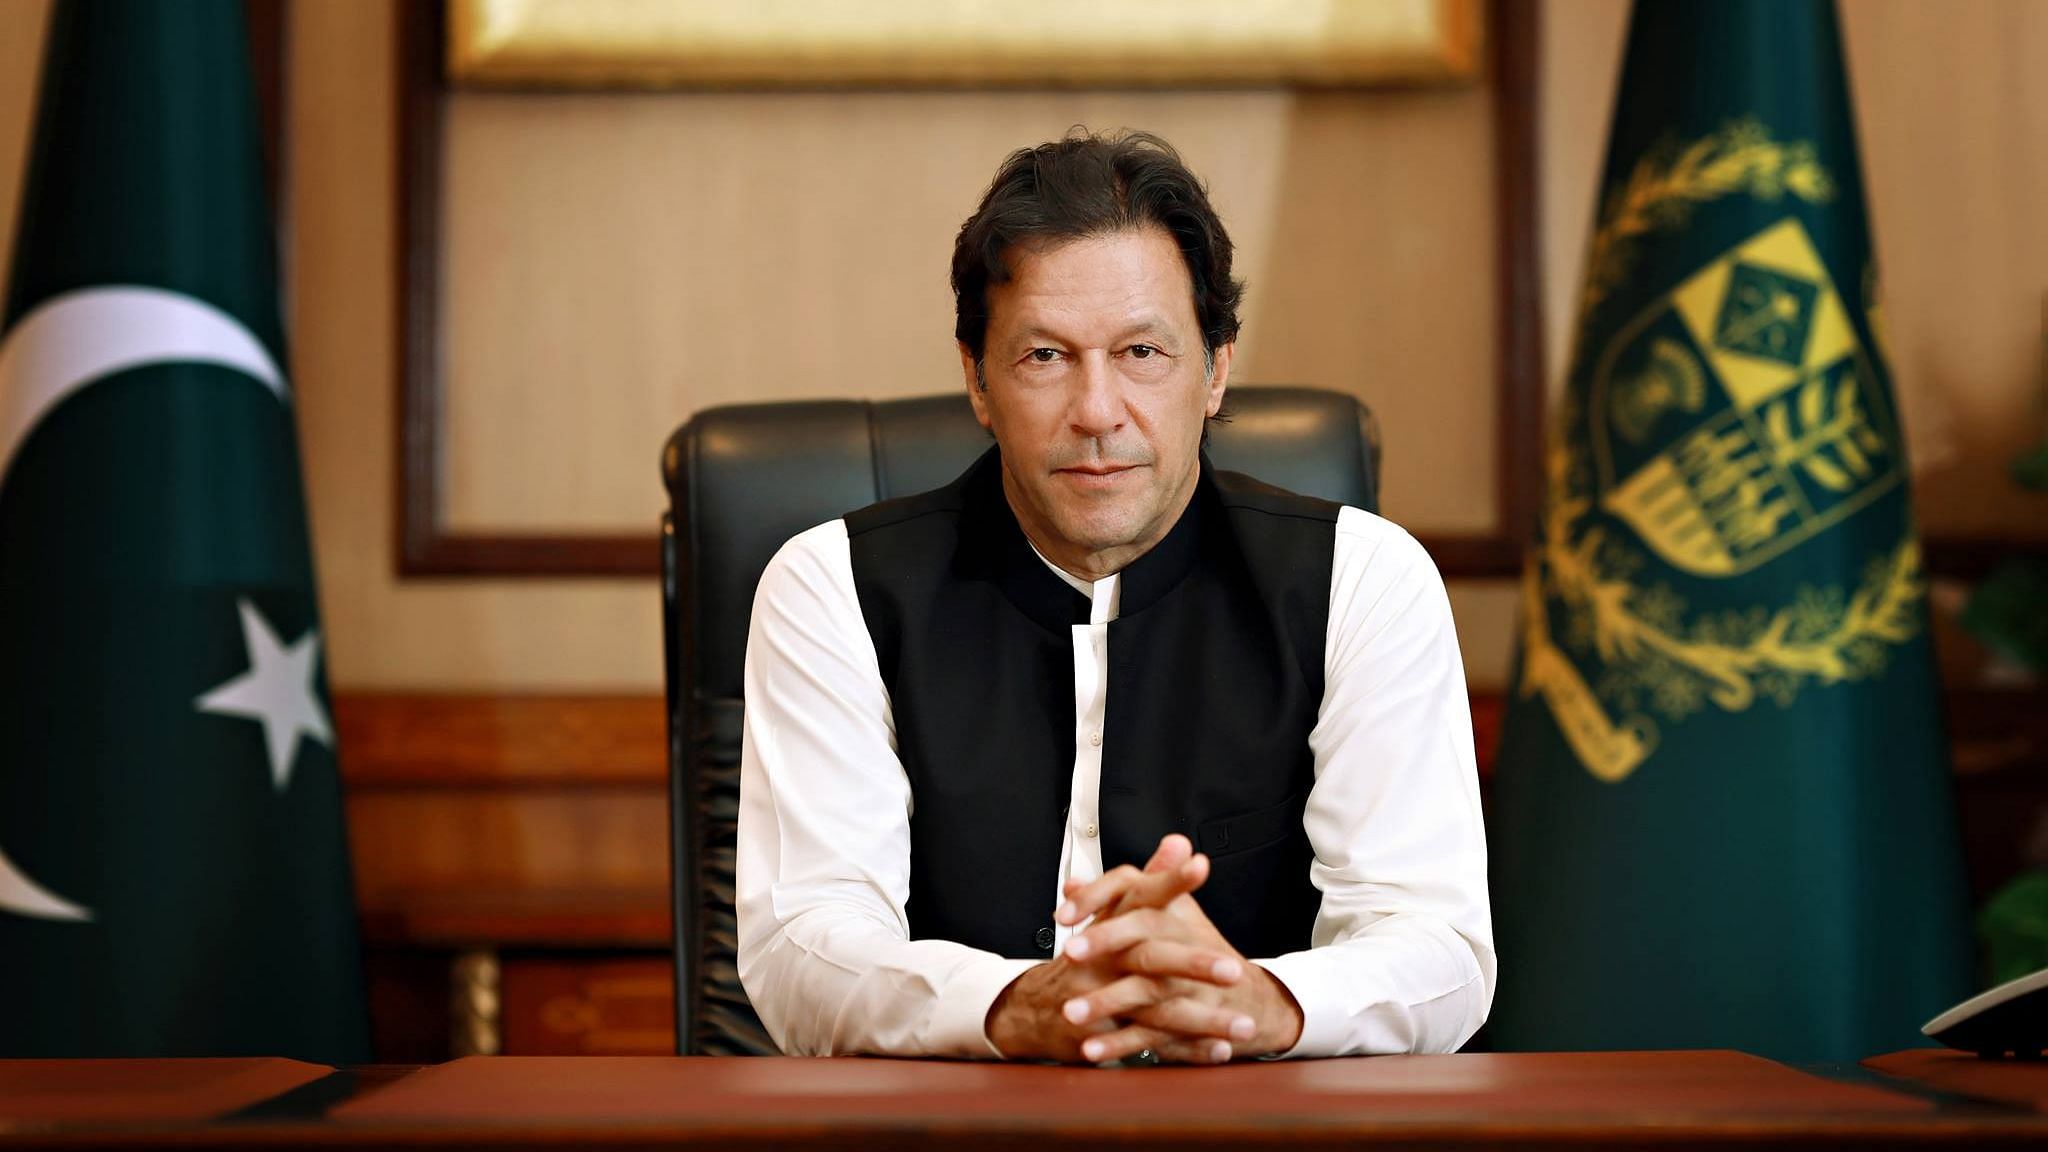 ICC World Cup 2019: Pakistan PM Imran Khan Congratulates Team For 'Great Comeback'